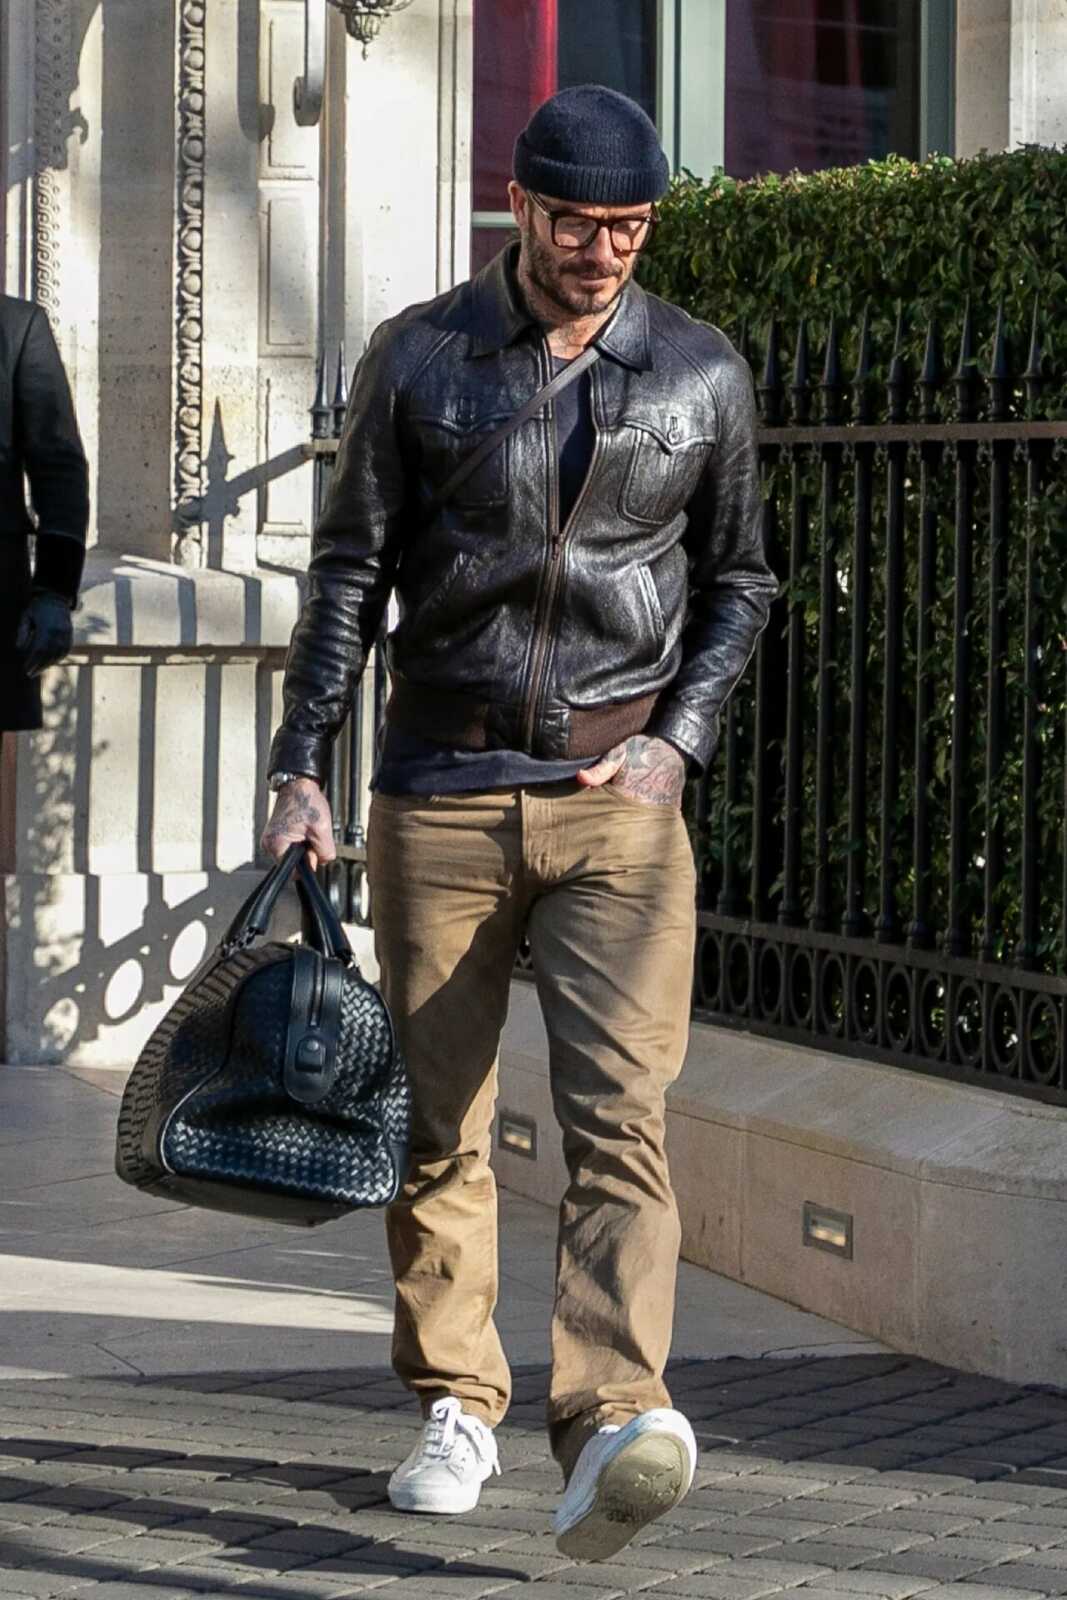 David Beckham's fashion style for men